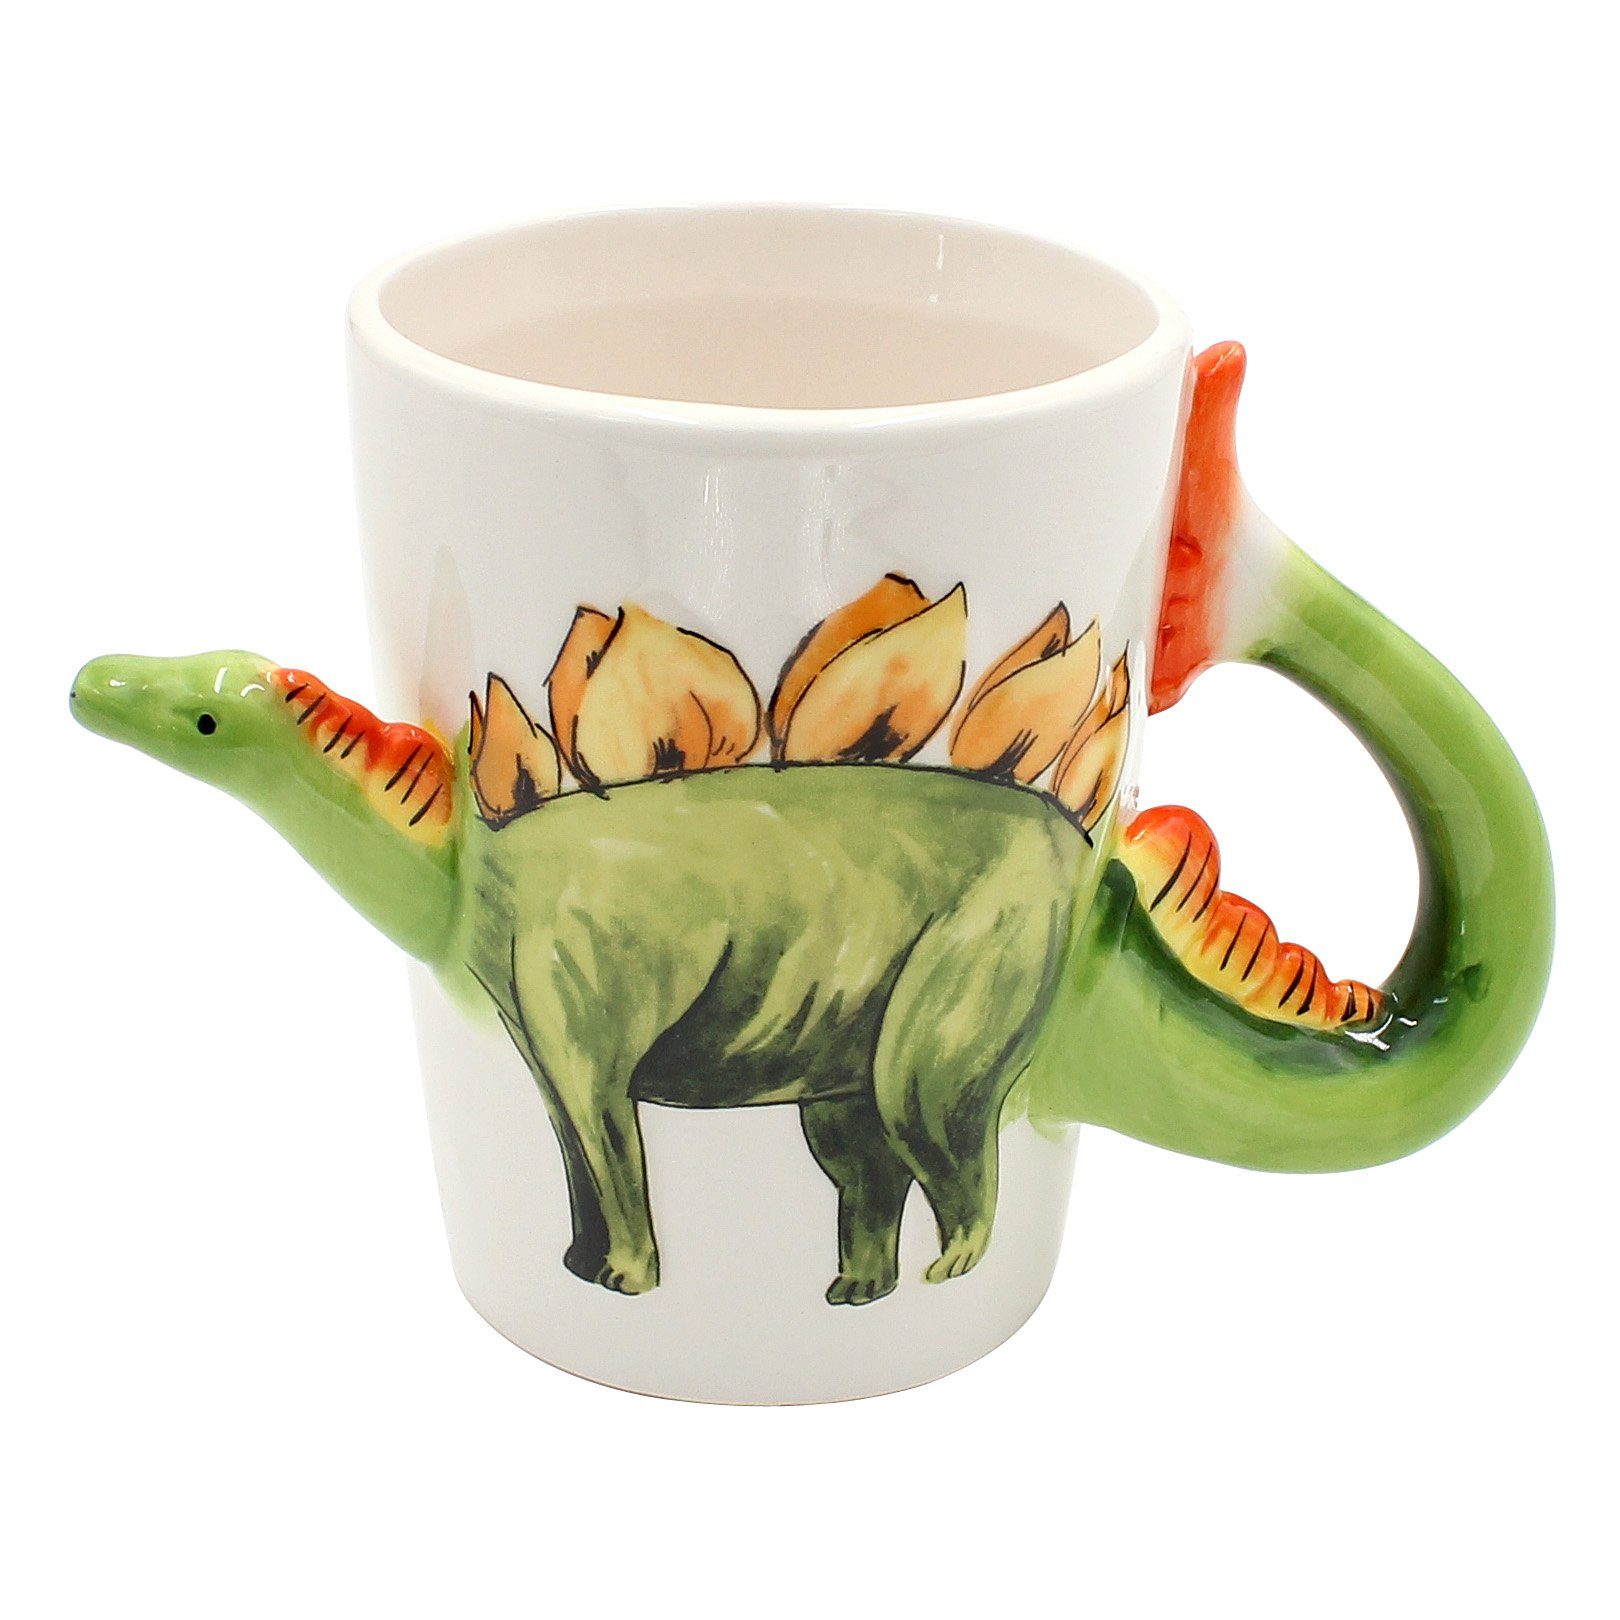 hellgrün Motive, Kaffeetasse Keramik Tasse Porzellan Kaffeebecher aus mit Dino versch. Dekohelden24